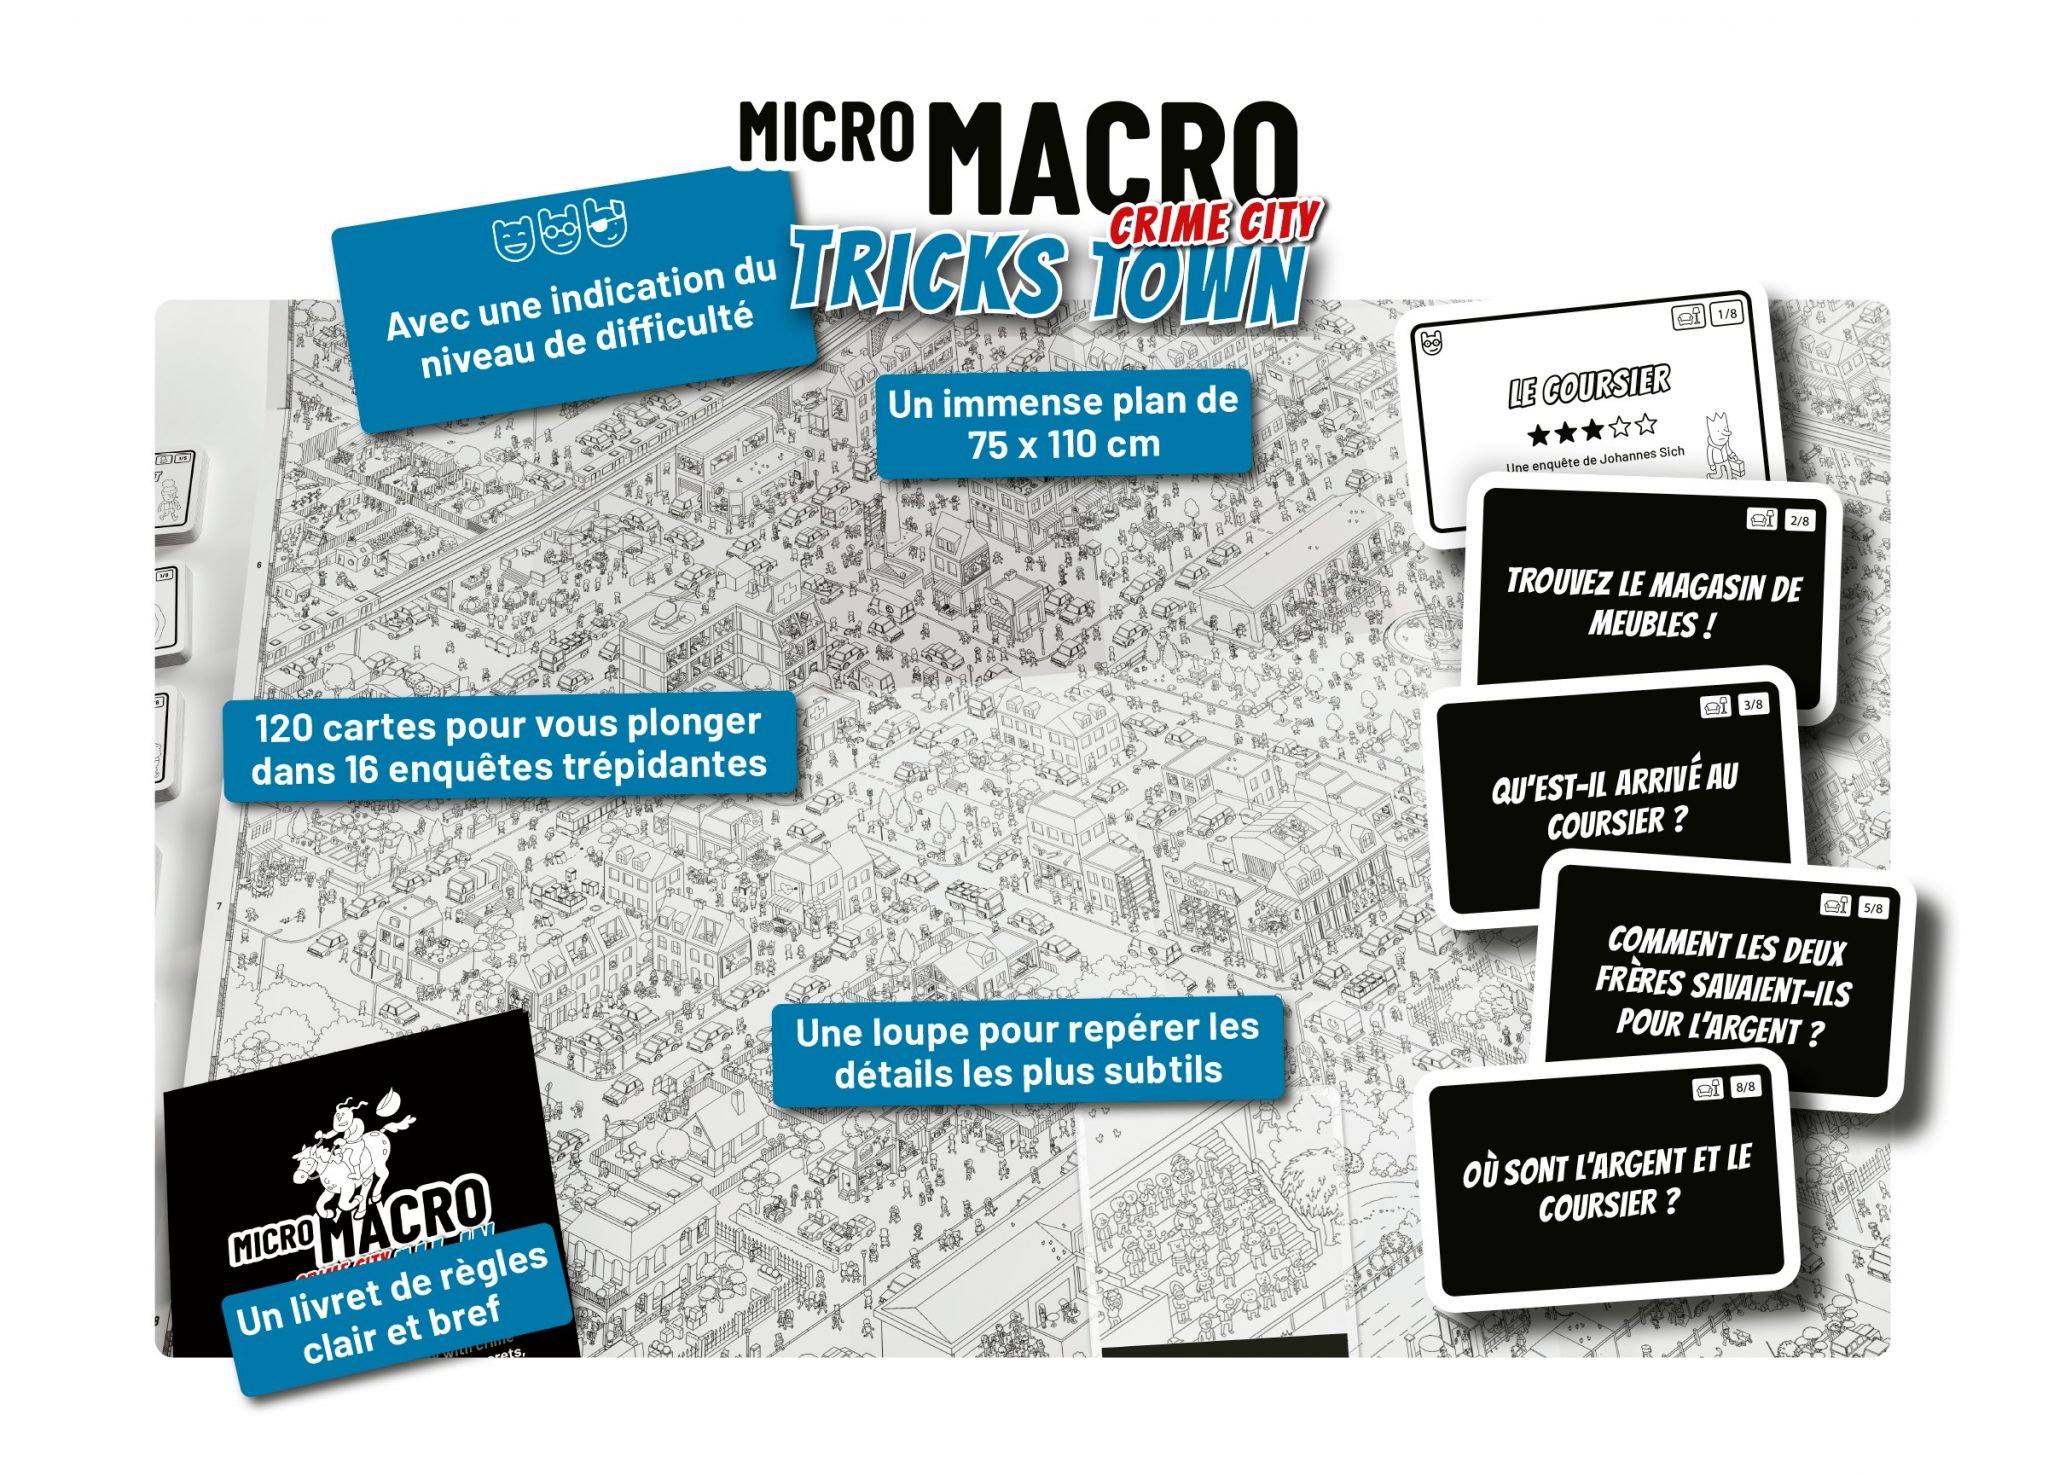 Présentation du jeu MicroMacro: Crime City - Tricks Town (VF)